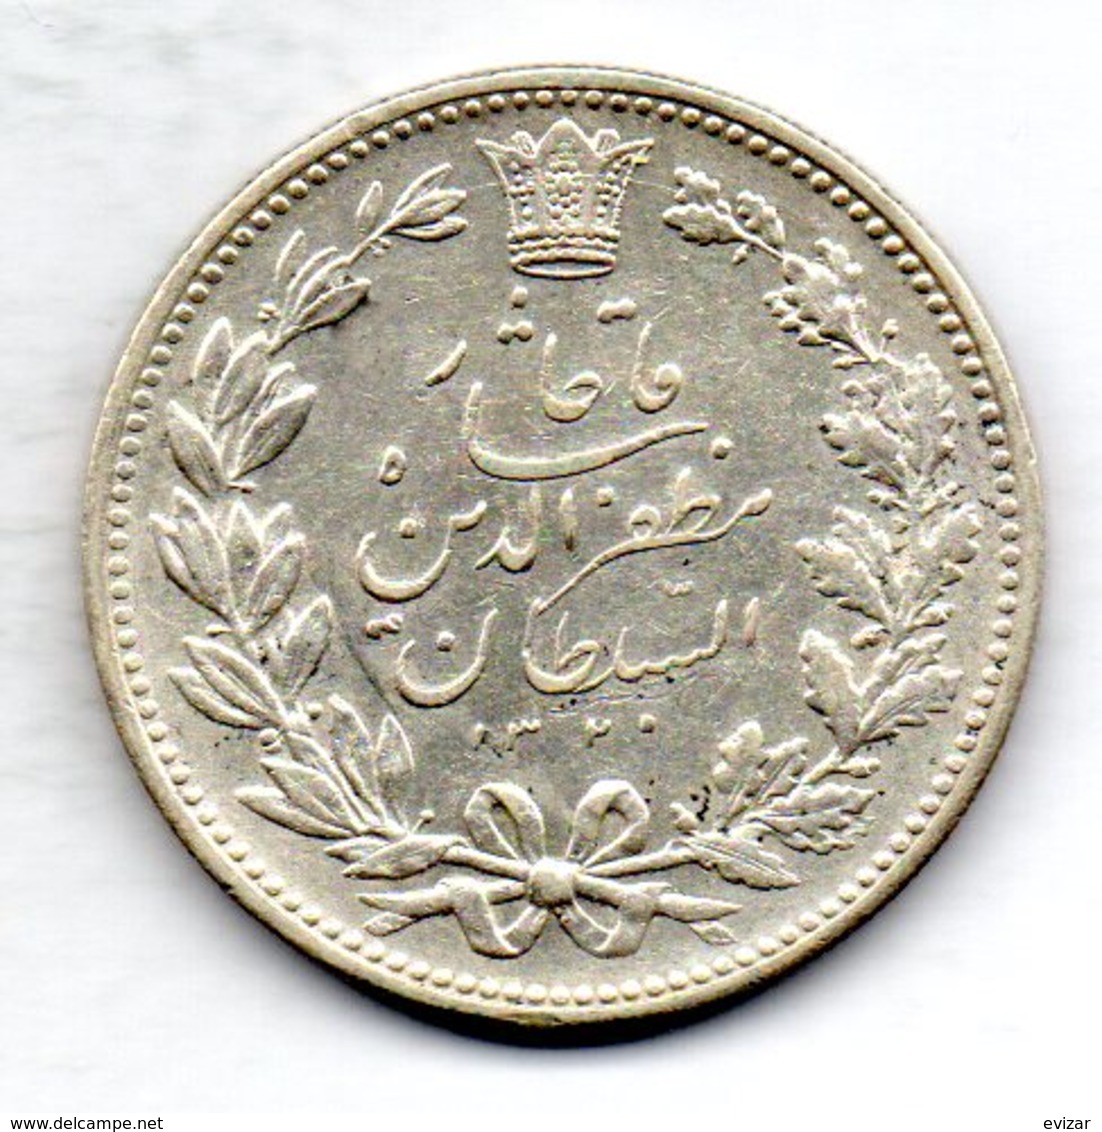 IRAN, 5 Krans (5.000 Dinars), Silver, Year AH 1320 (1902), KM #976 - Iran